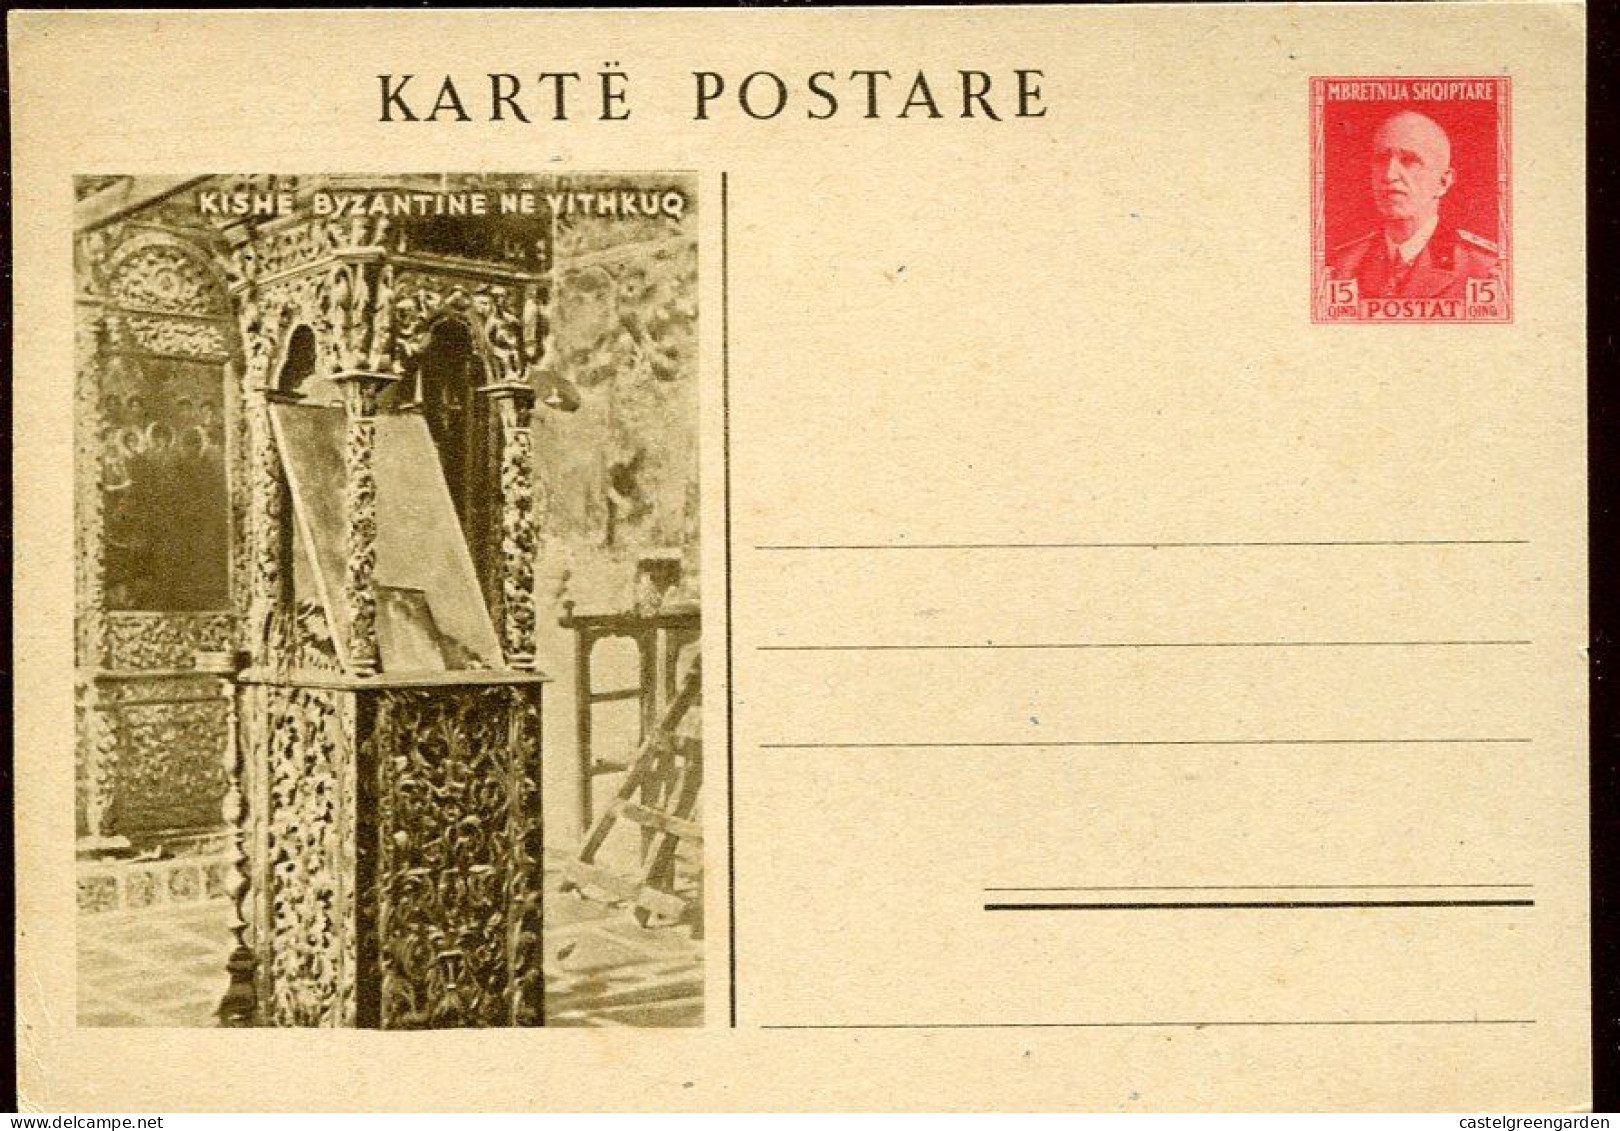 X0362 Albania, Stationery Card  Karte Postare 15q.kishe Byzantine Ne Vithuq - Albanie